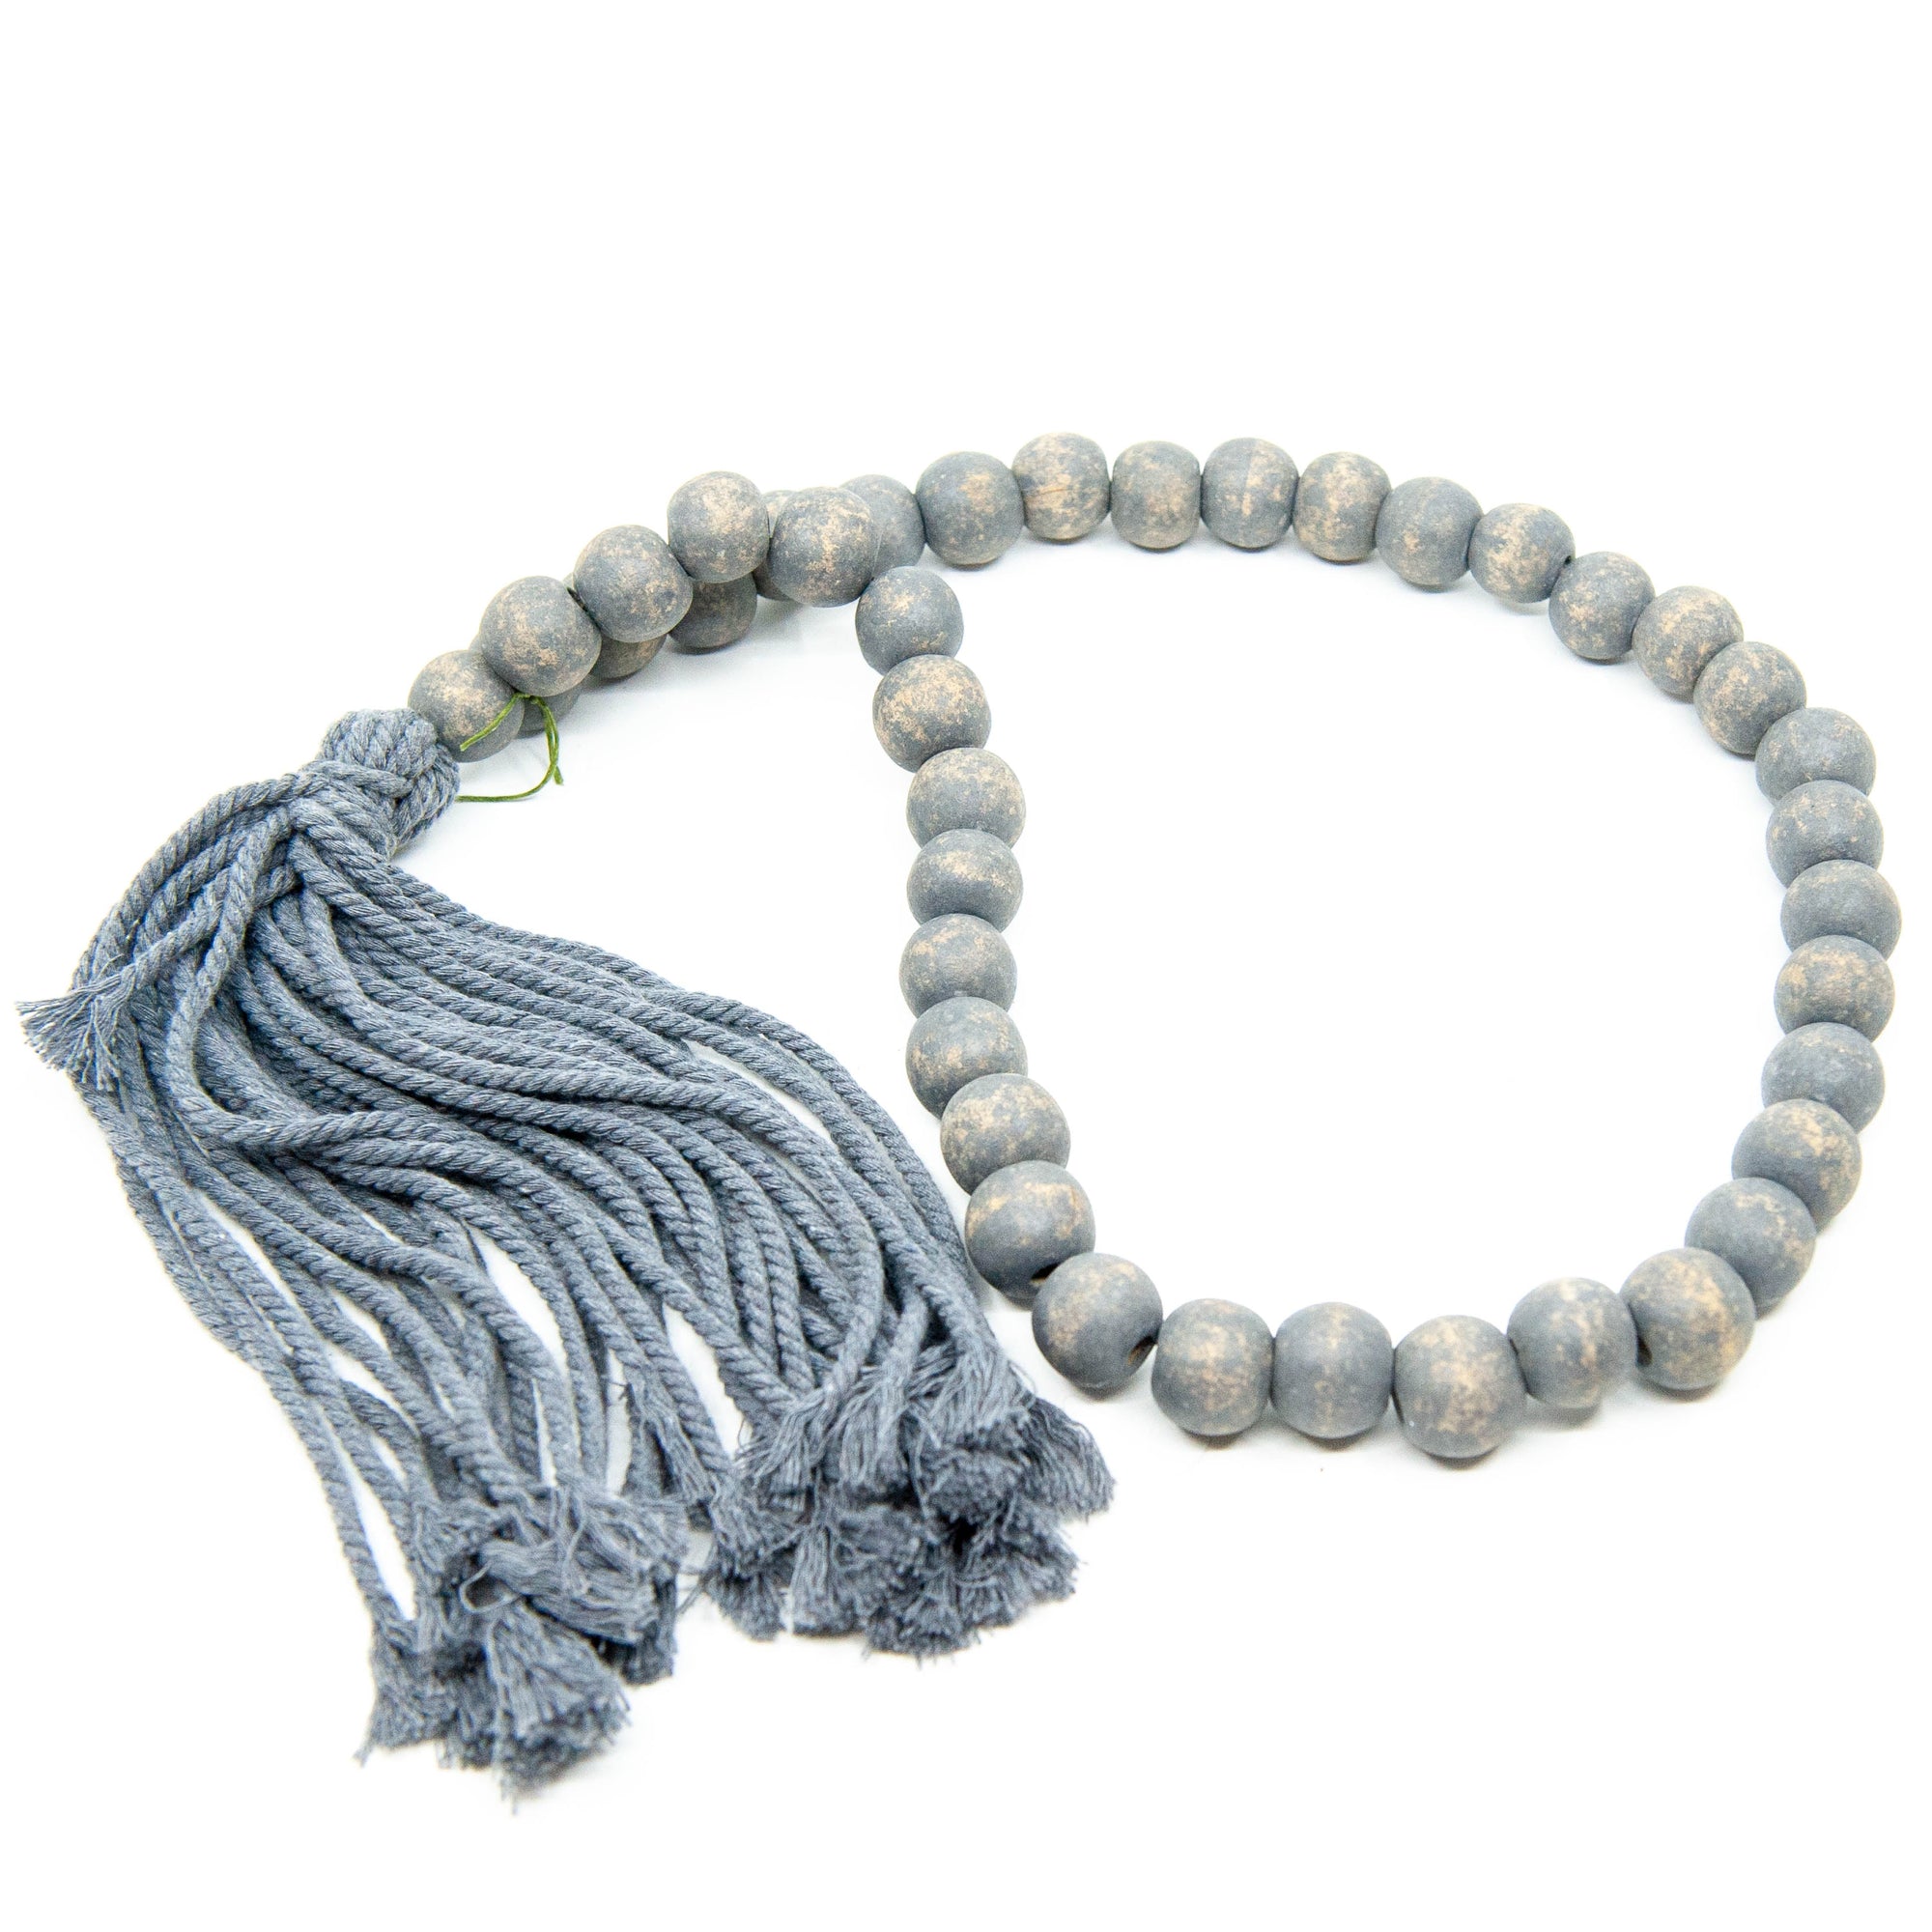 Decorative Beads (20mm)- Grey Tassel